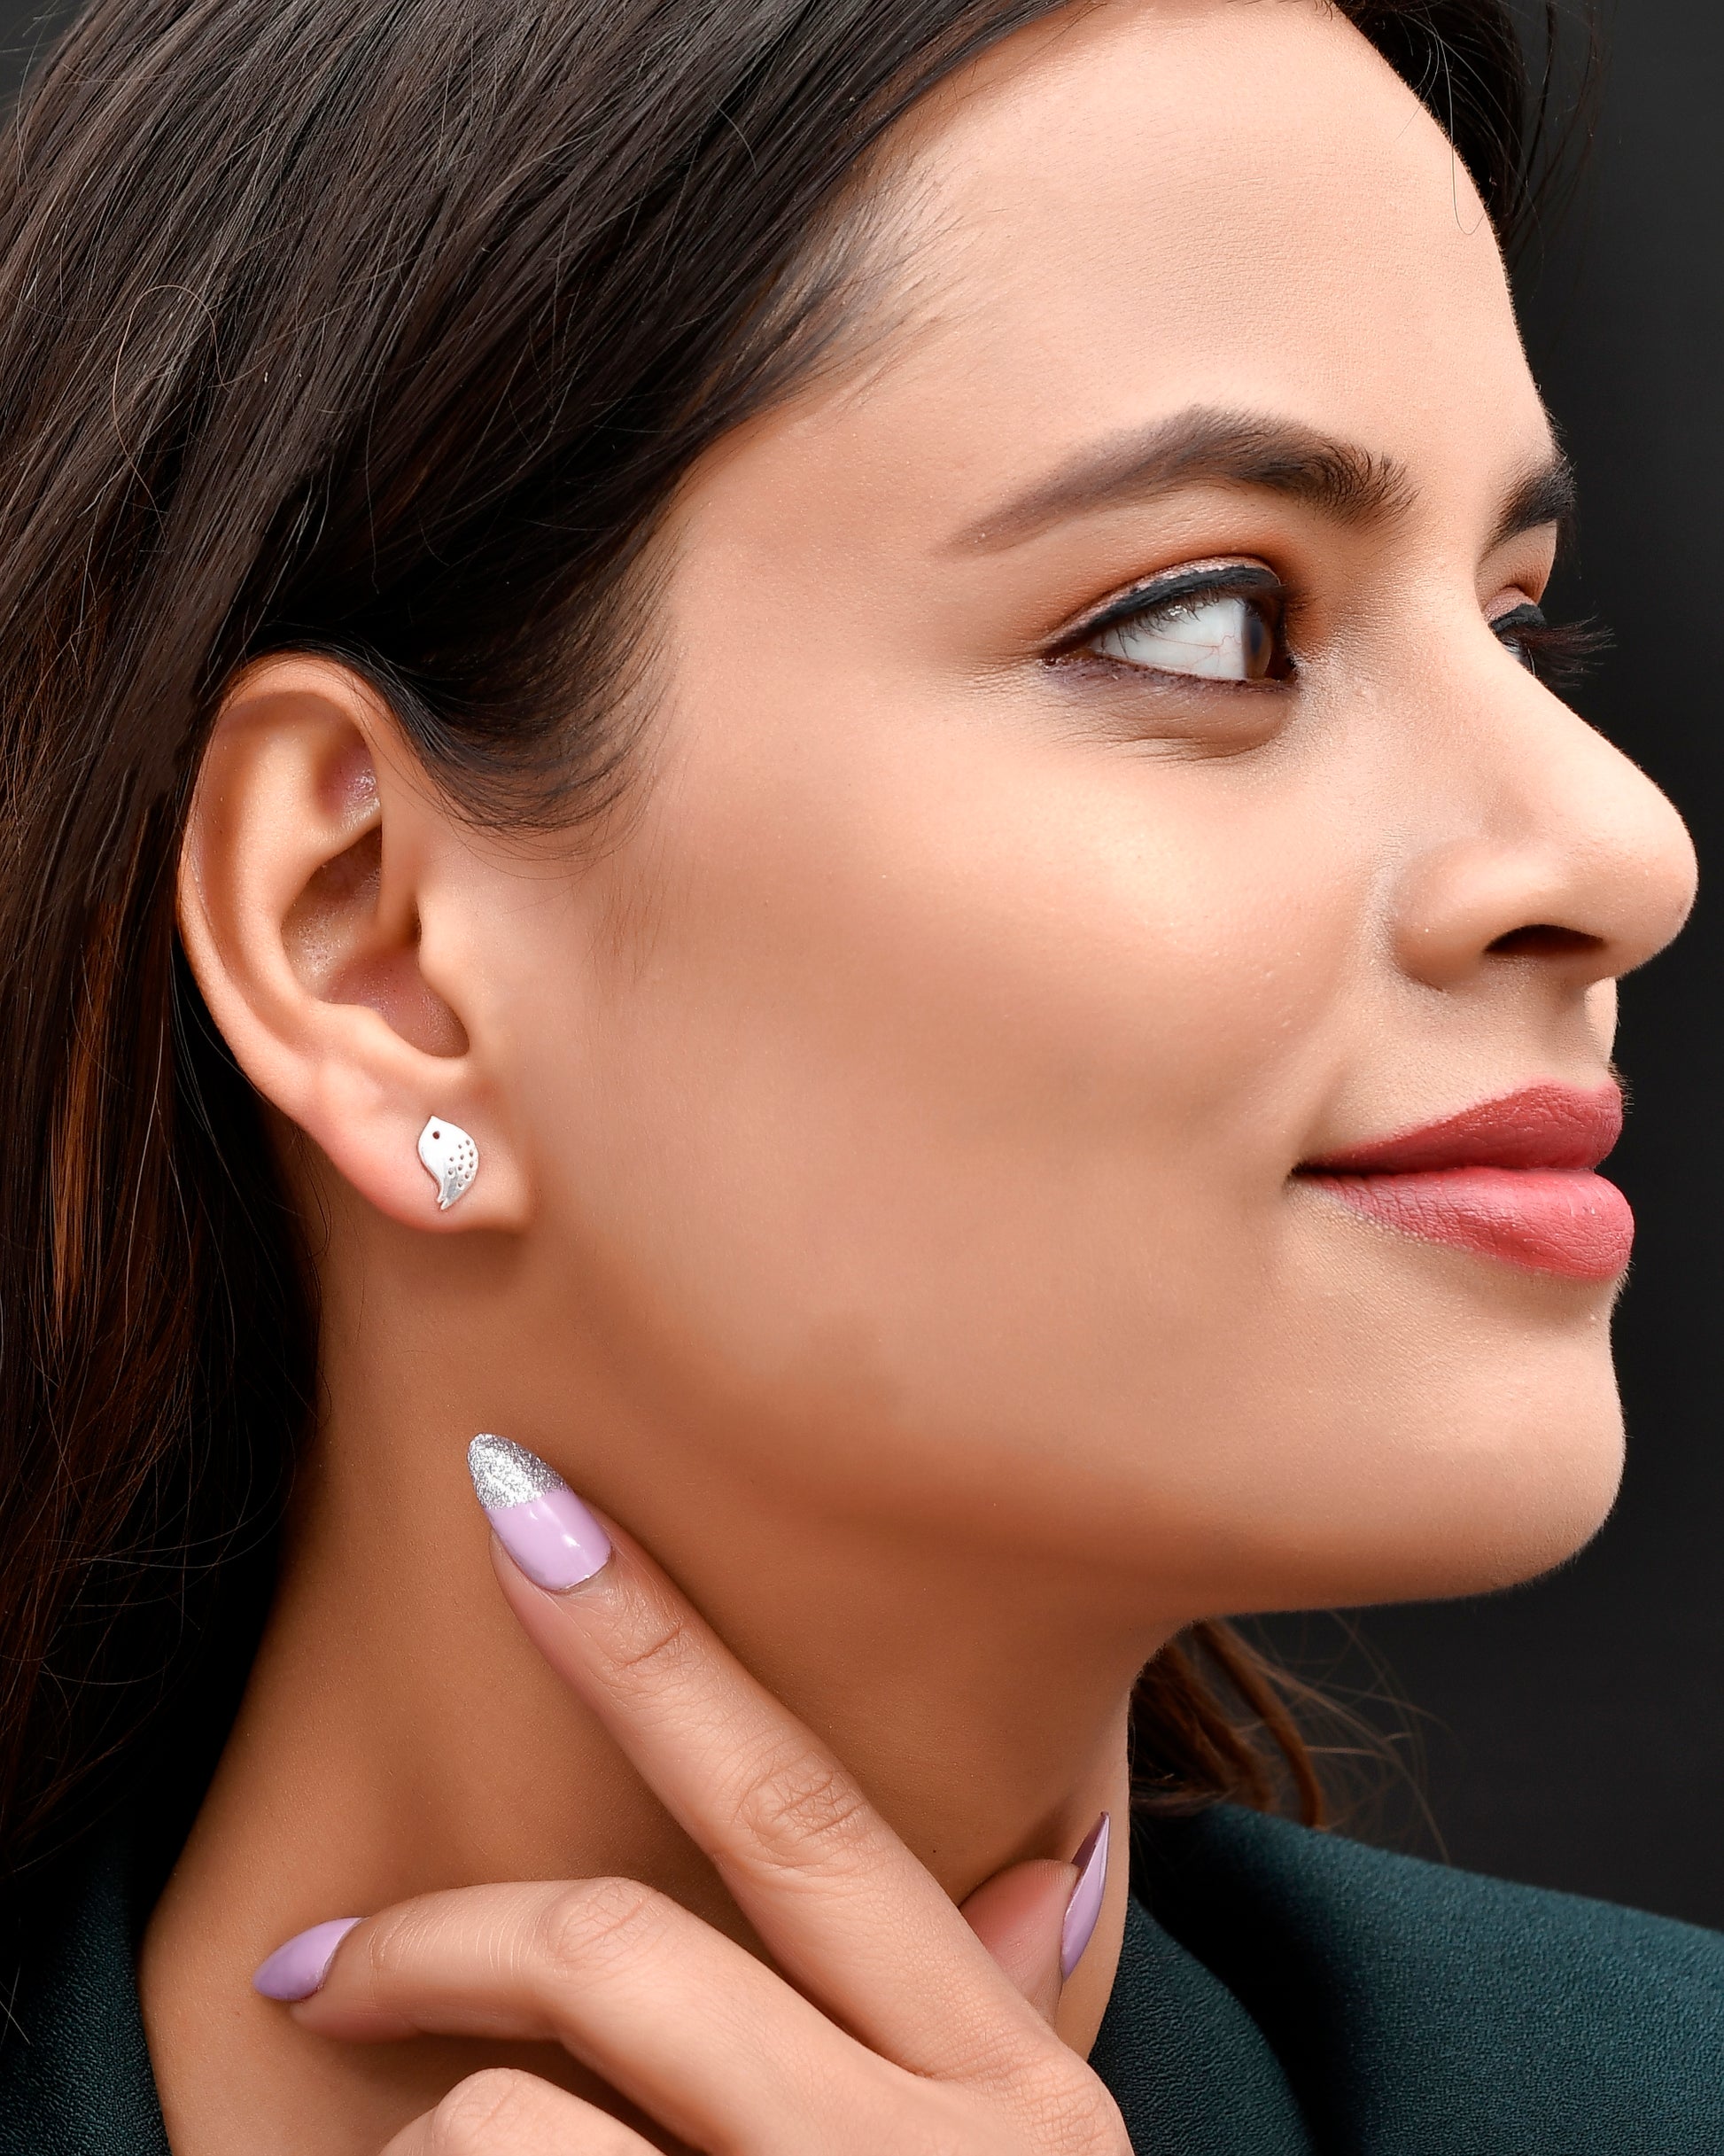 earring for women